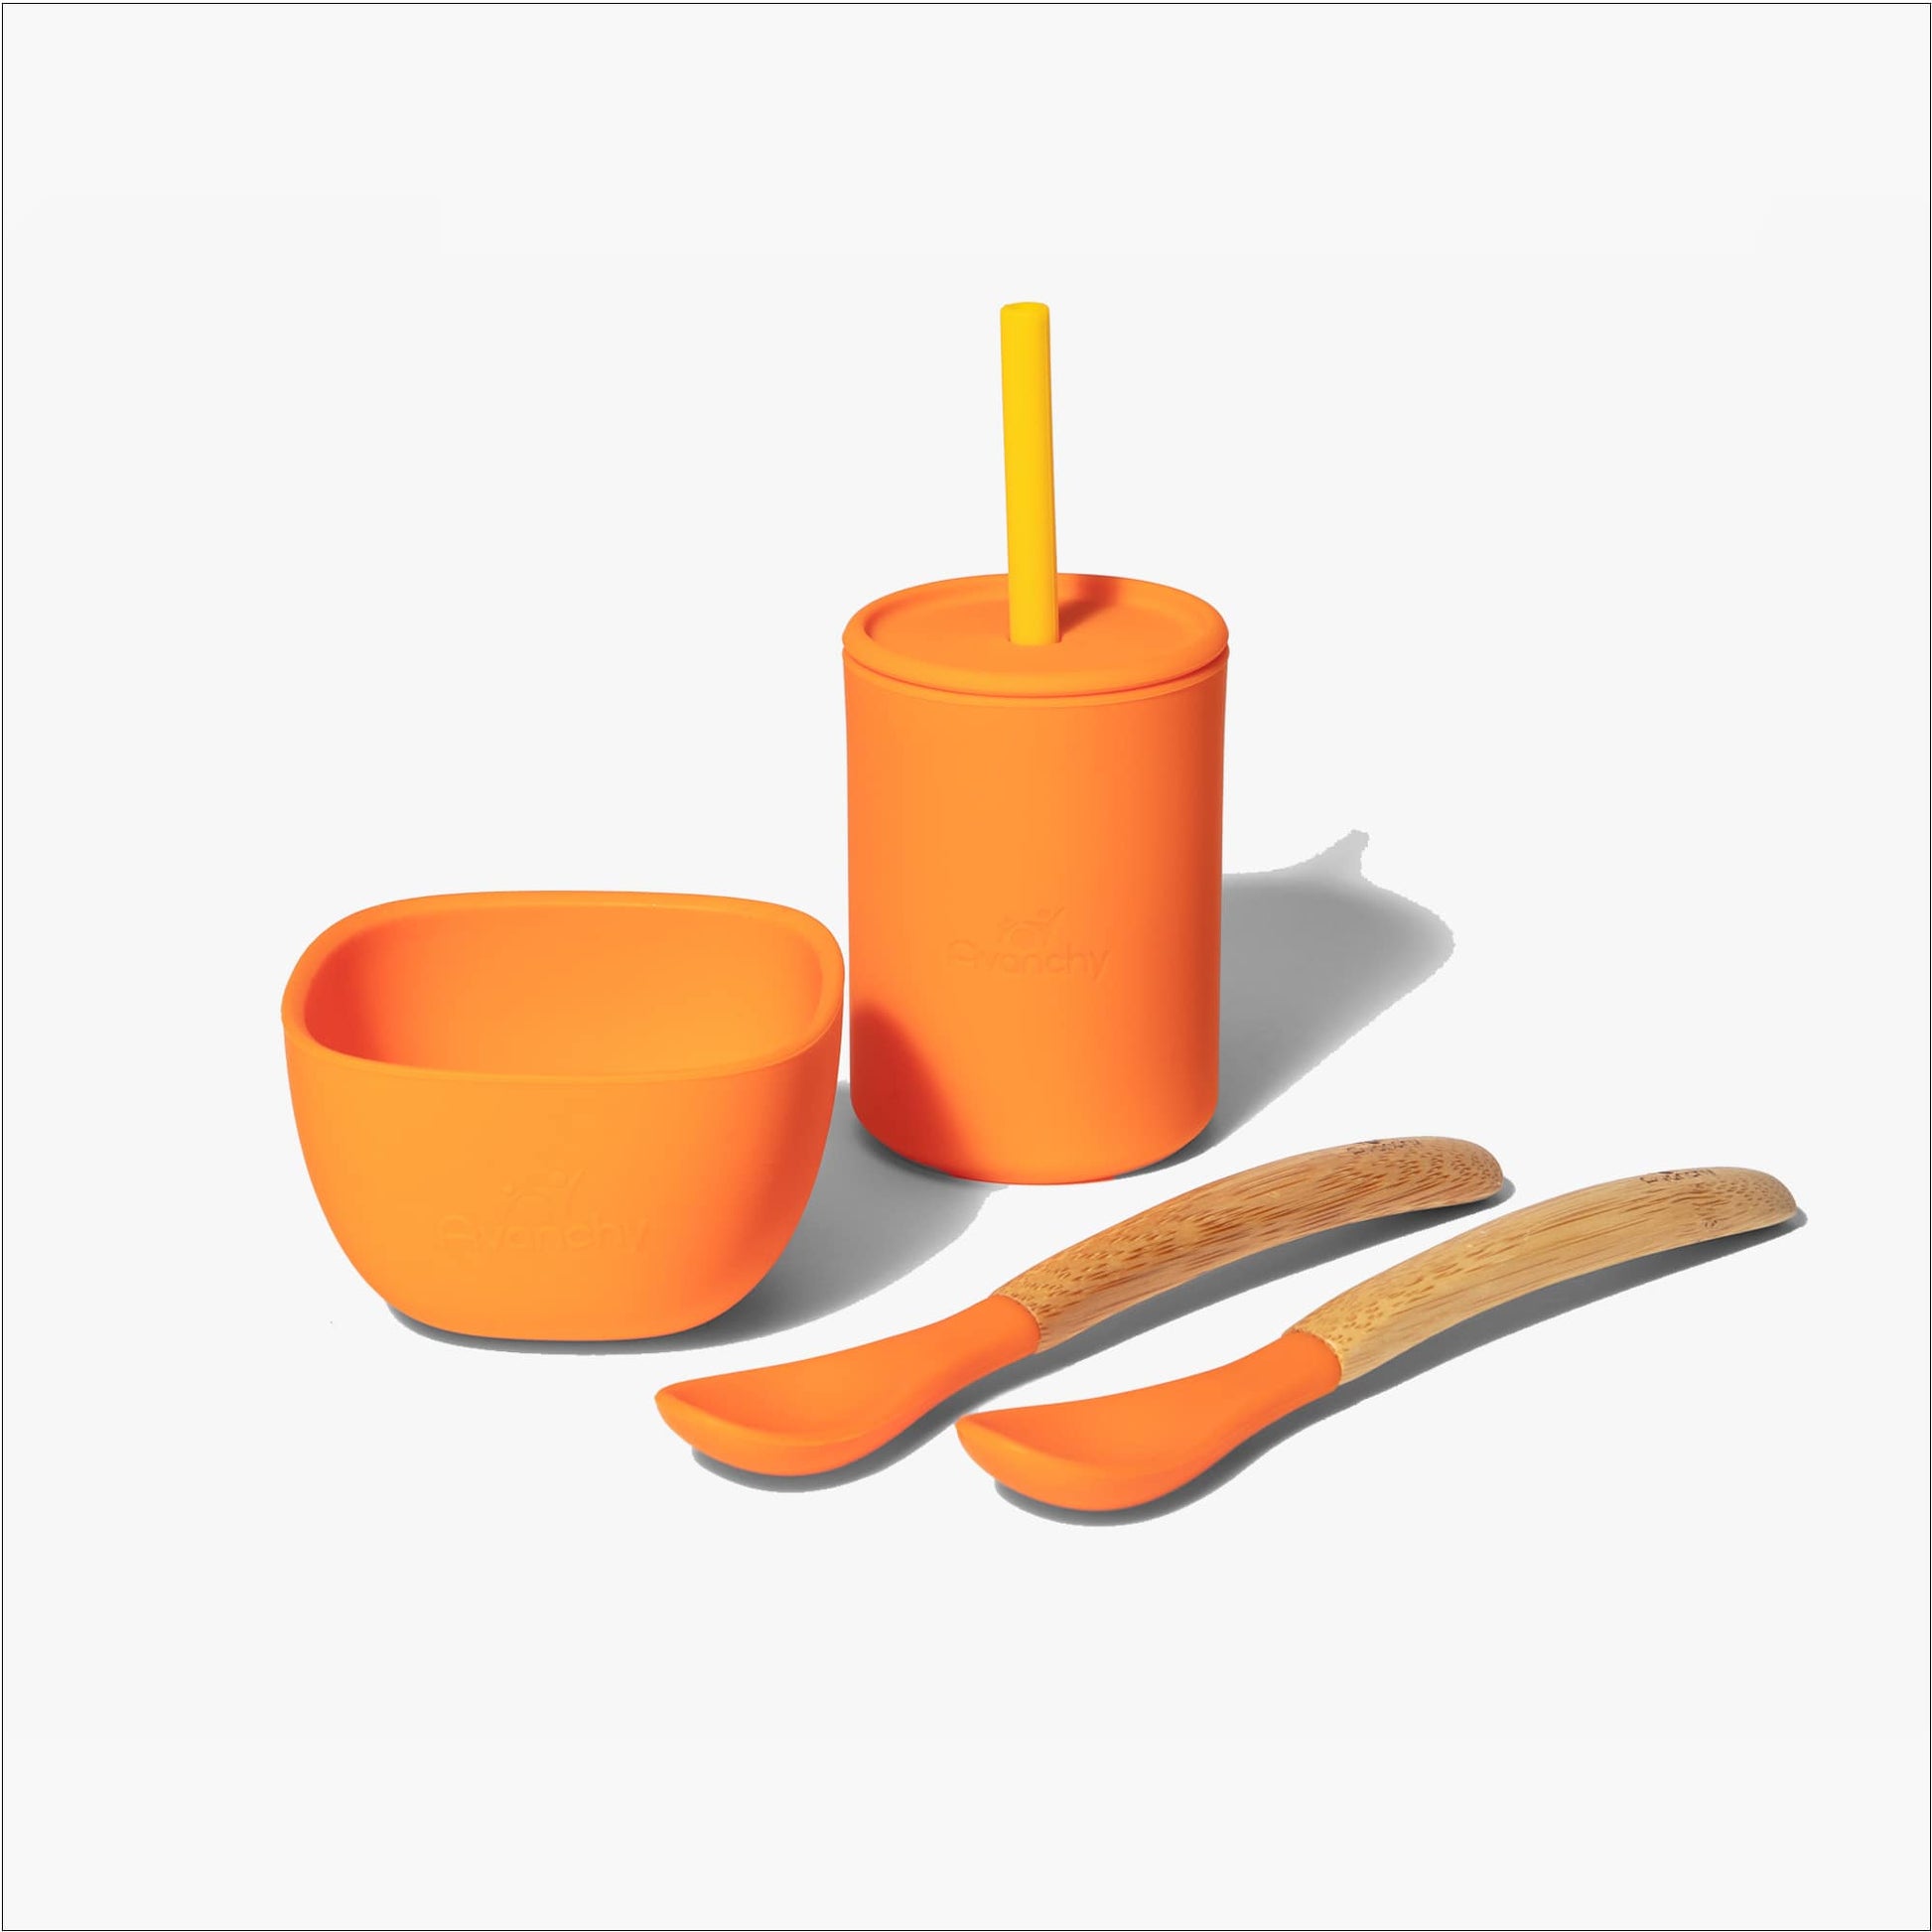 Silicone Rectangle Cup | Orange